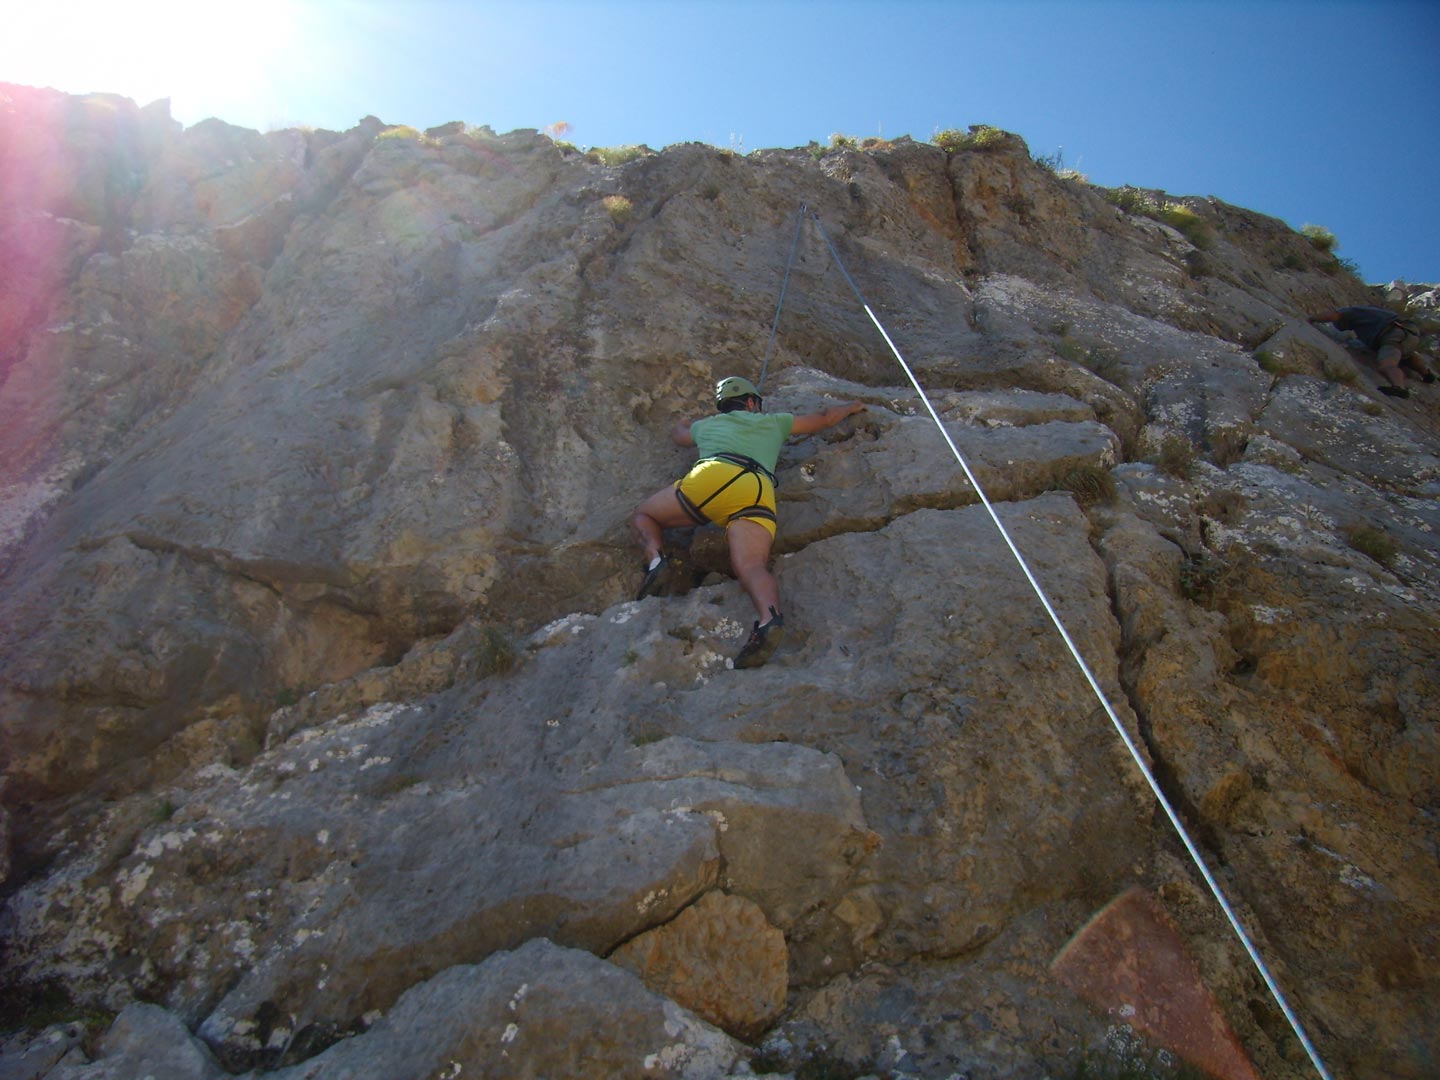 Rock Climbing - Alternative Crete